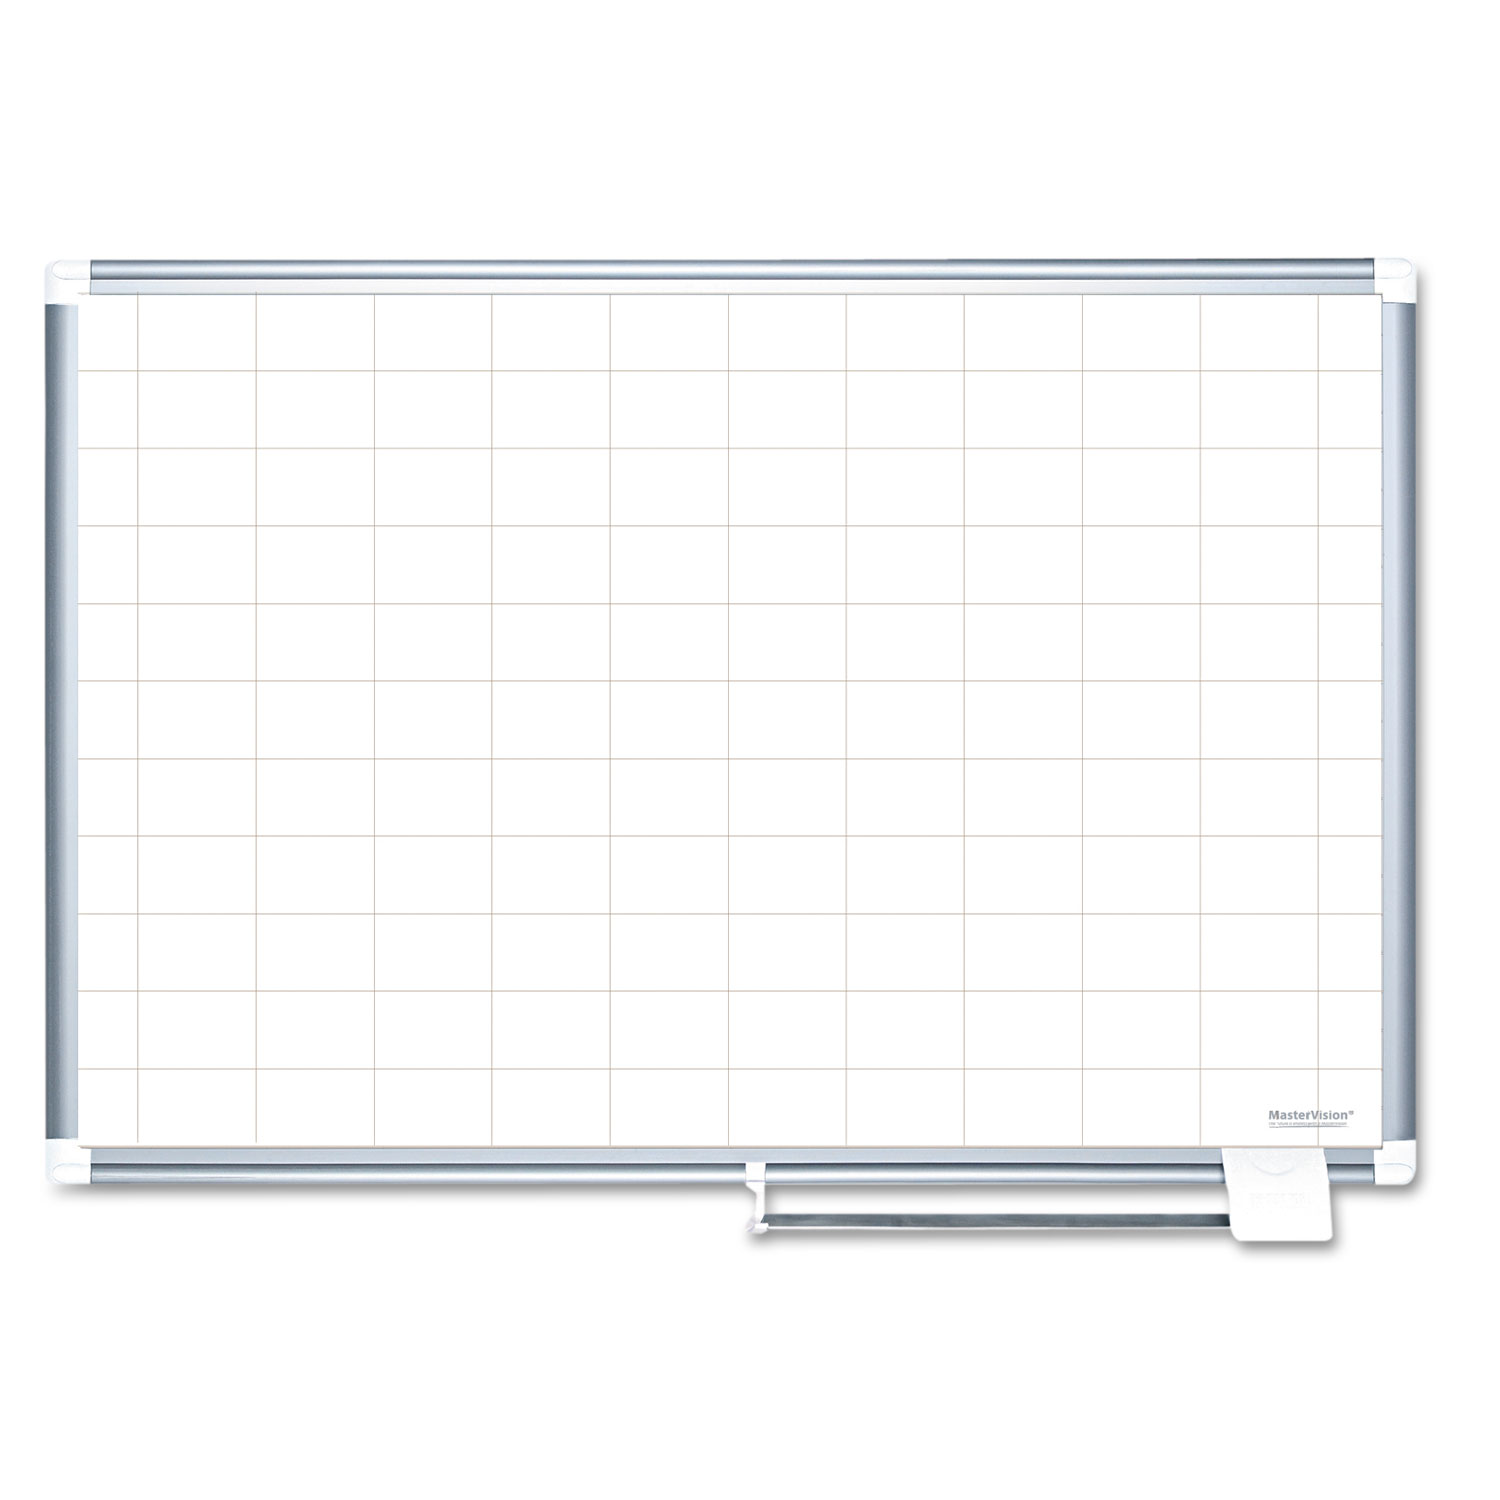  MasterVision MA2793830 Grid Planning Board, 2 x 3 Grid, 72 x 48, White/Silver (BVCMA2793830) 